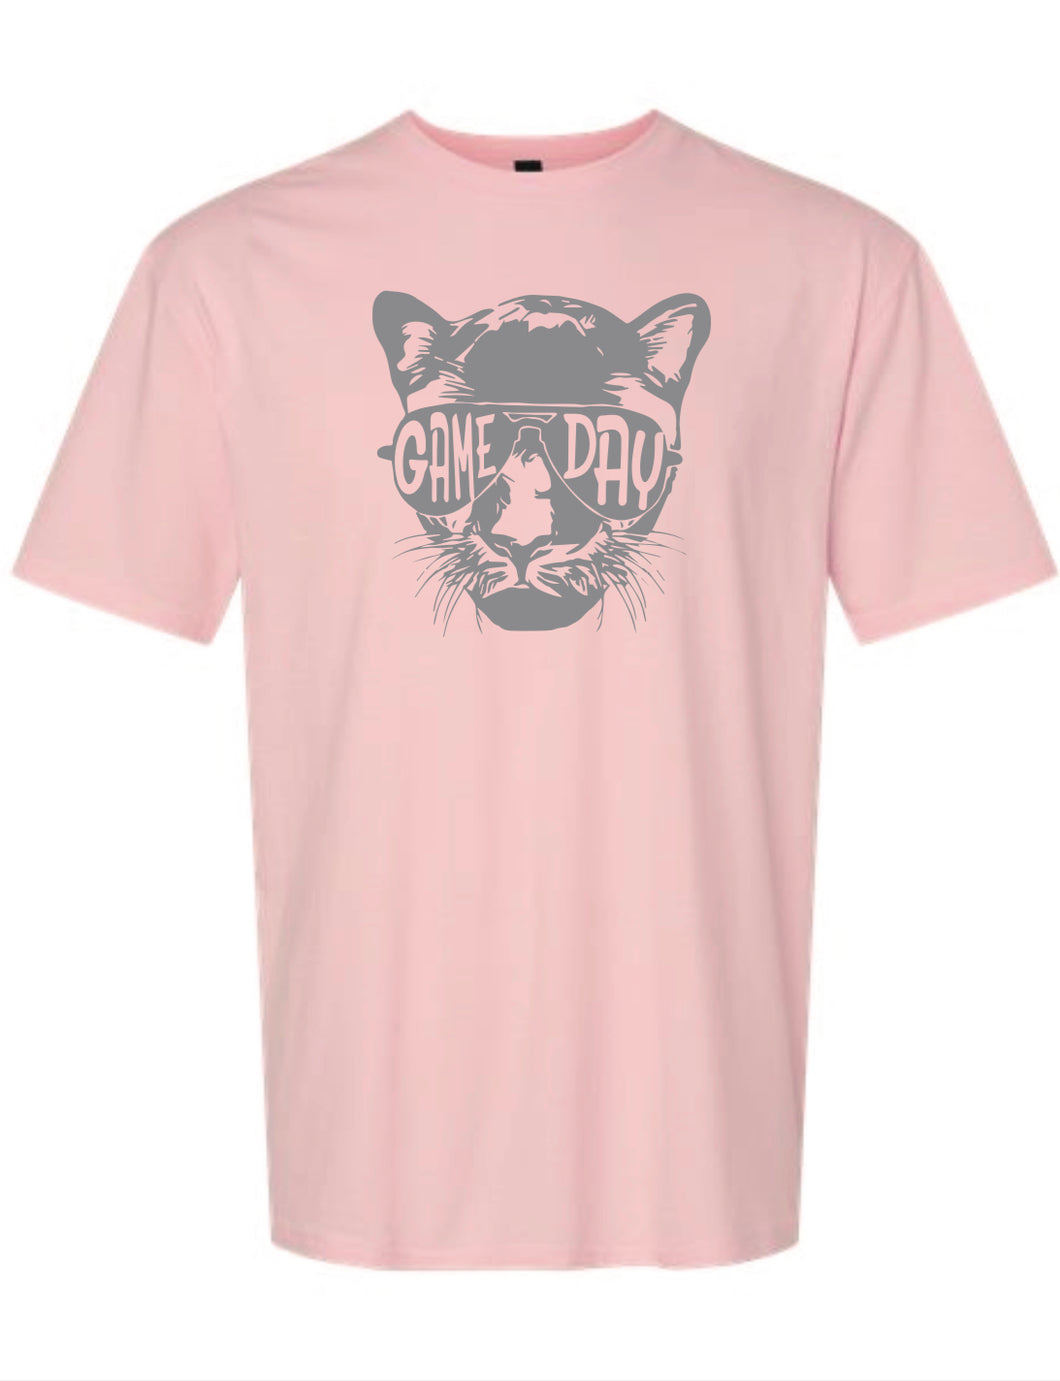 Adult Pink Cougar Tshirt